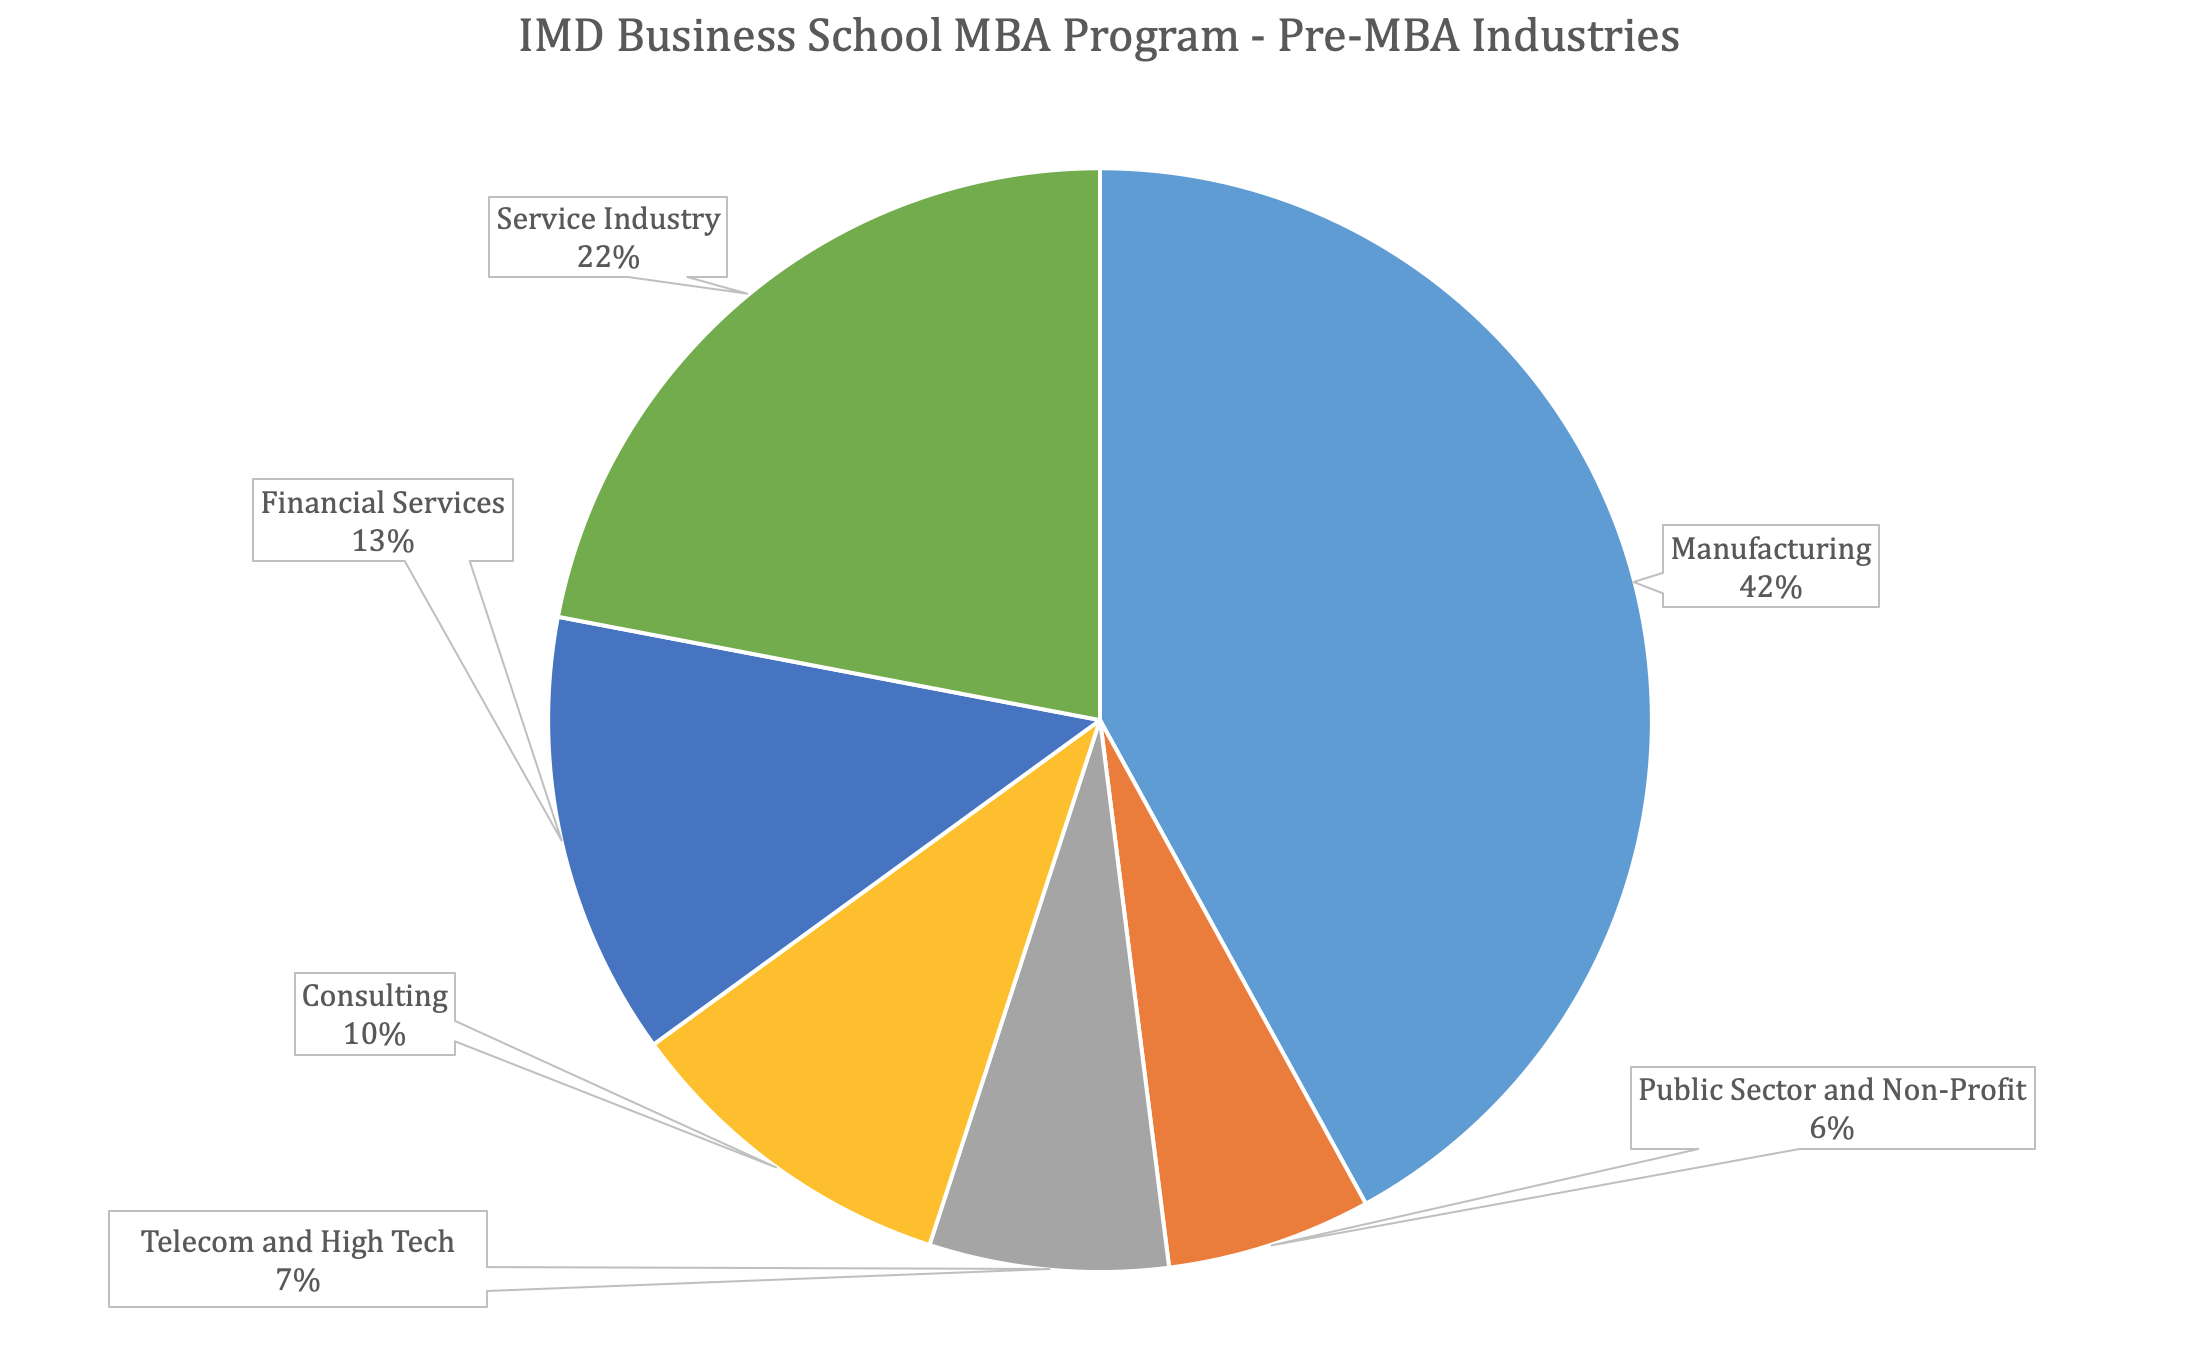 IMD Business School - IMD MBA Program - Incoming Class Pre-MBA Industries